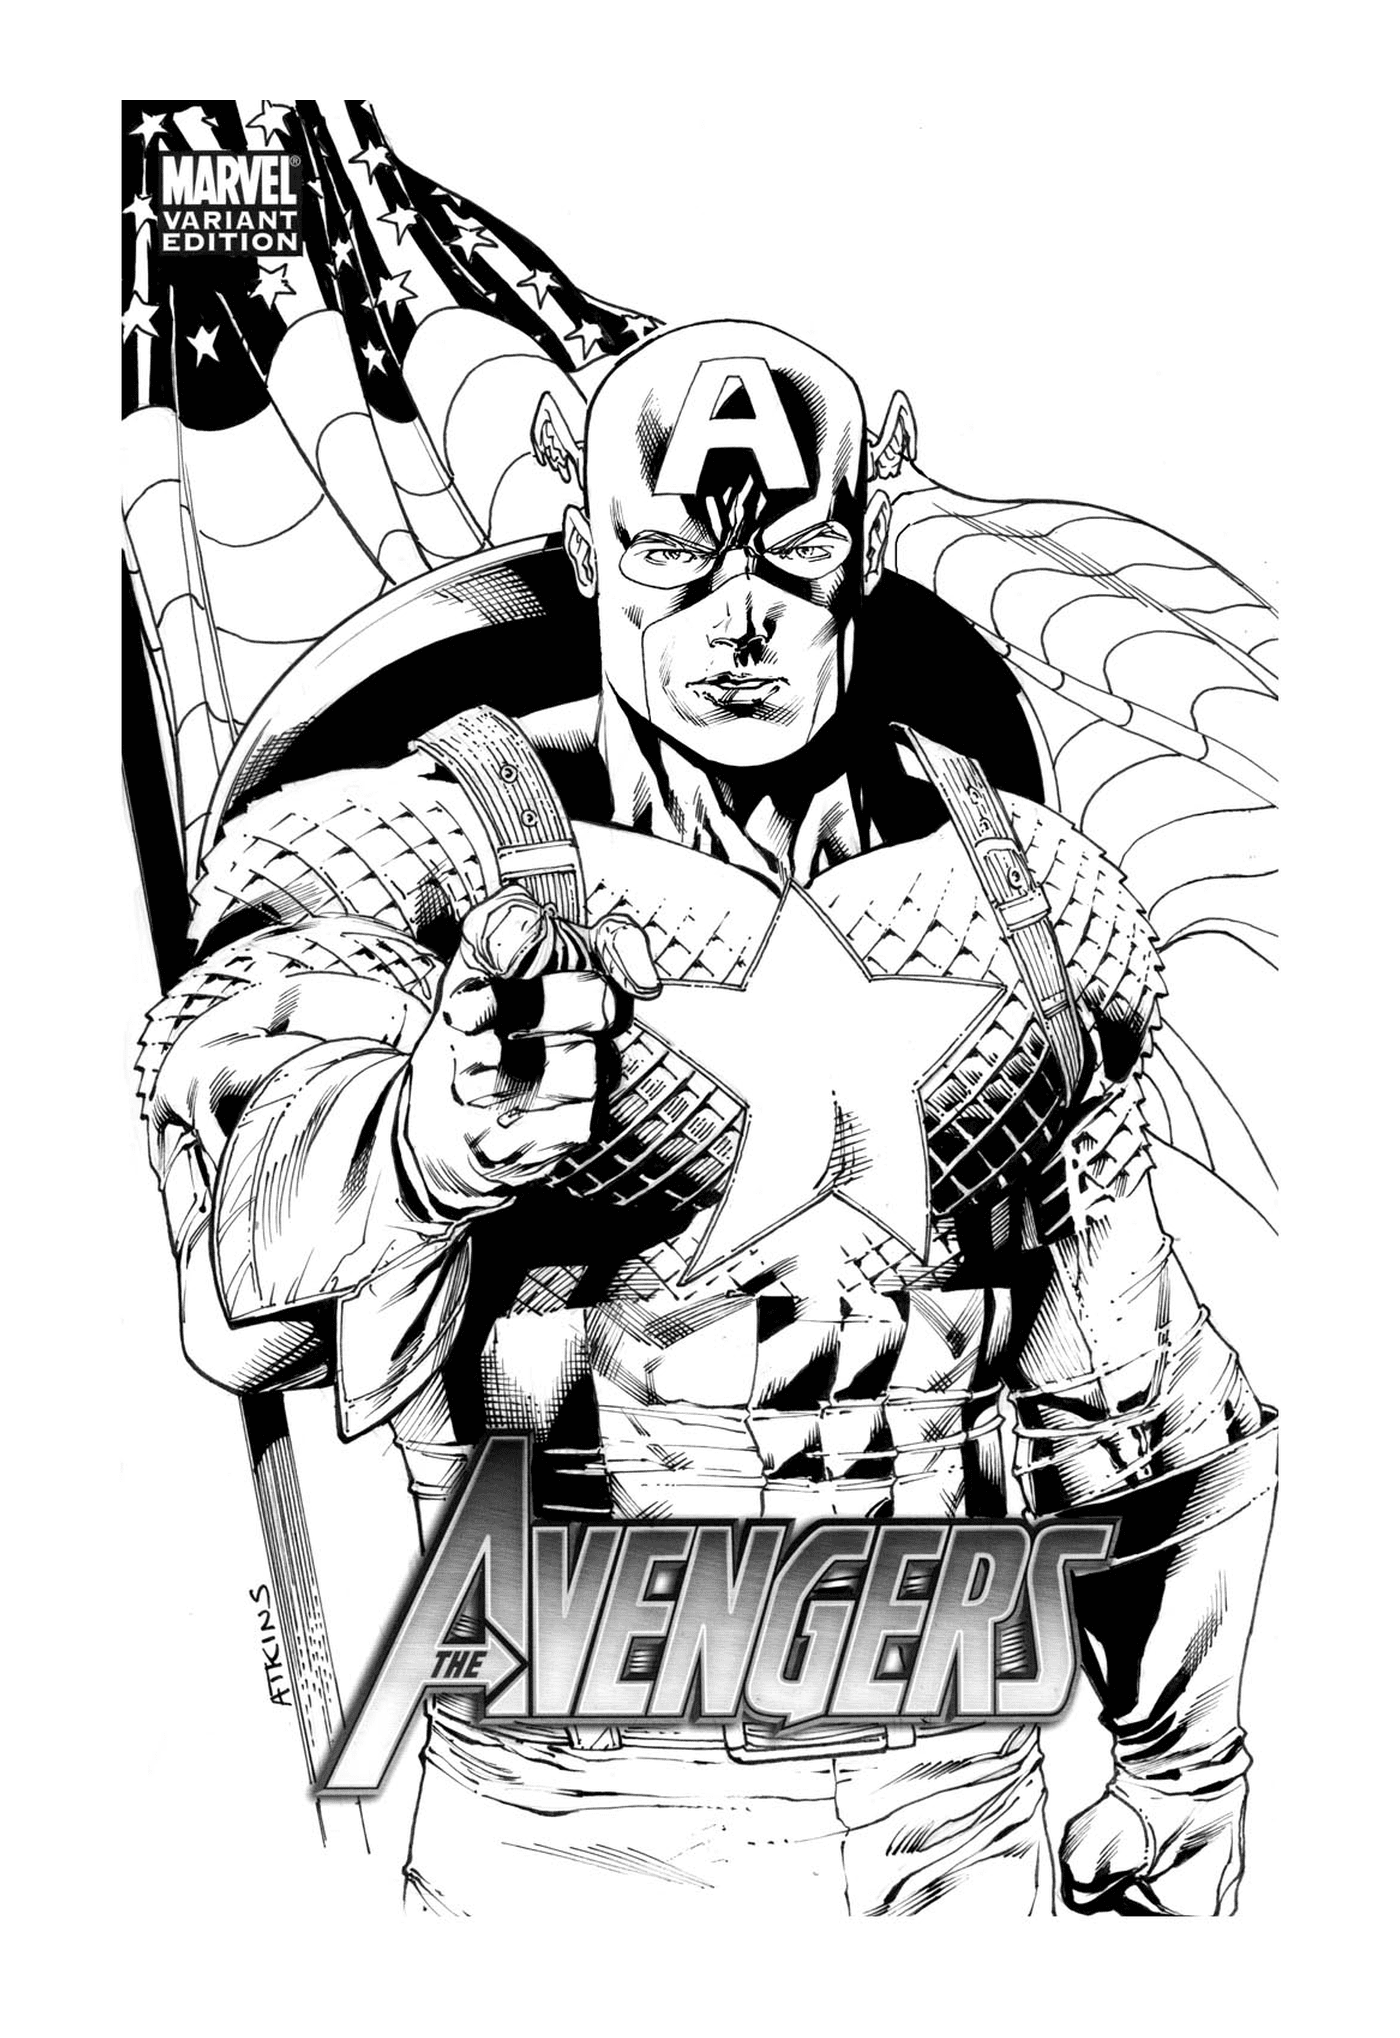  Avengers Captain America 274, man with a gun 